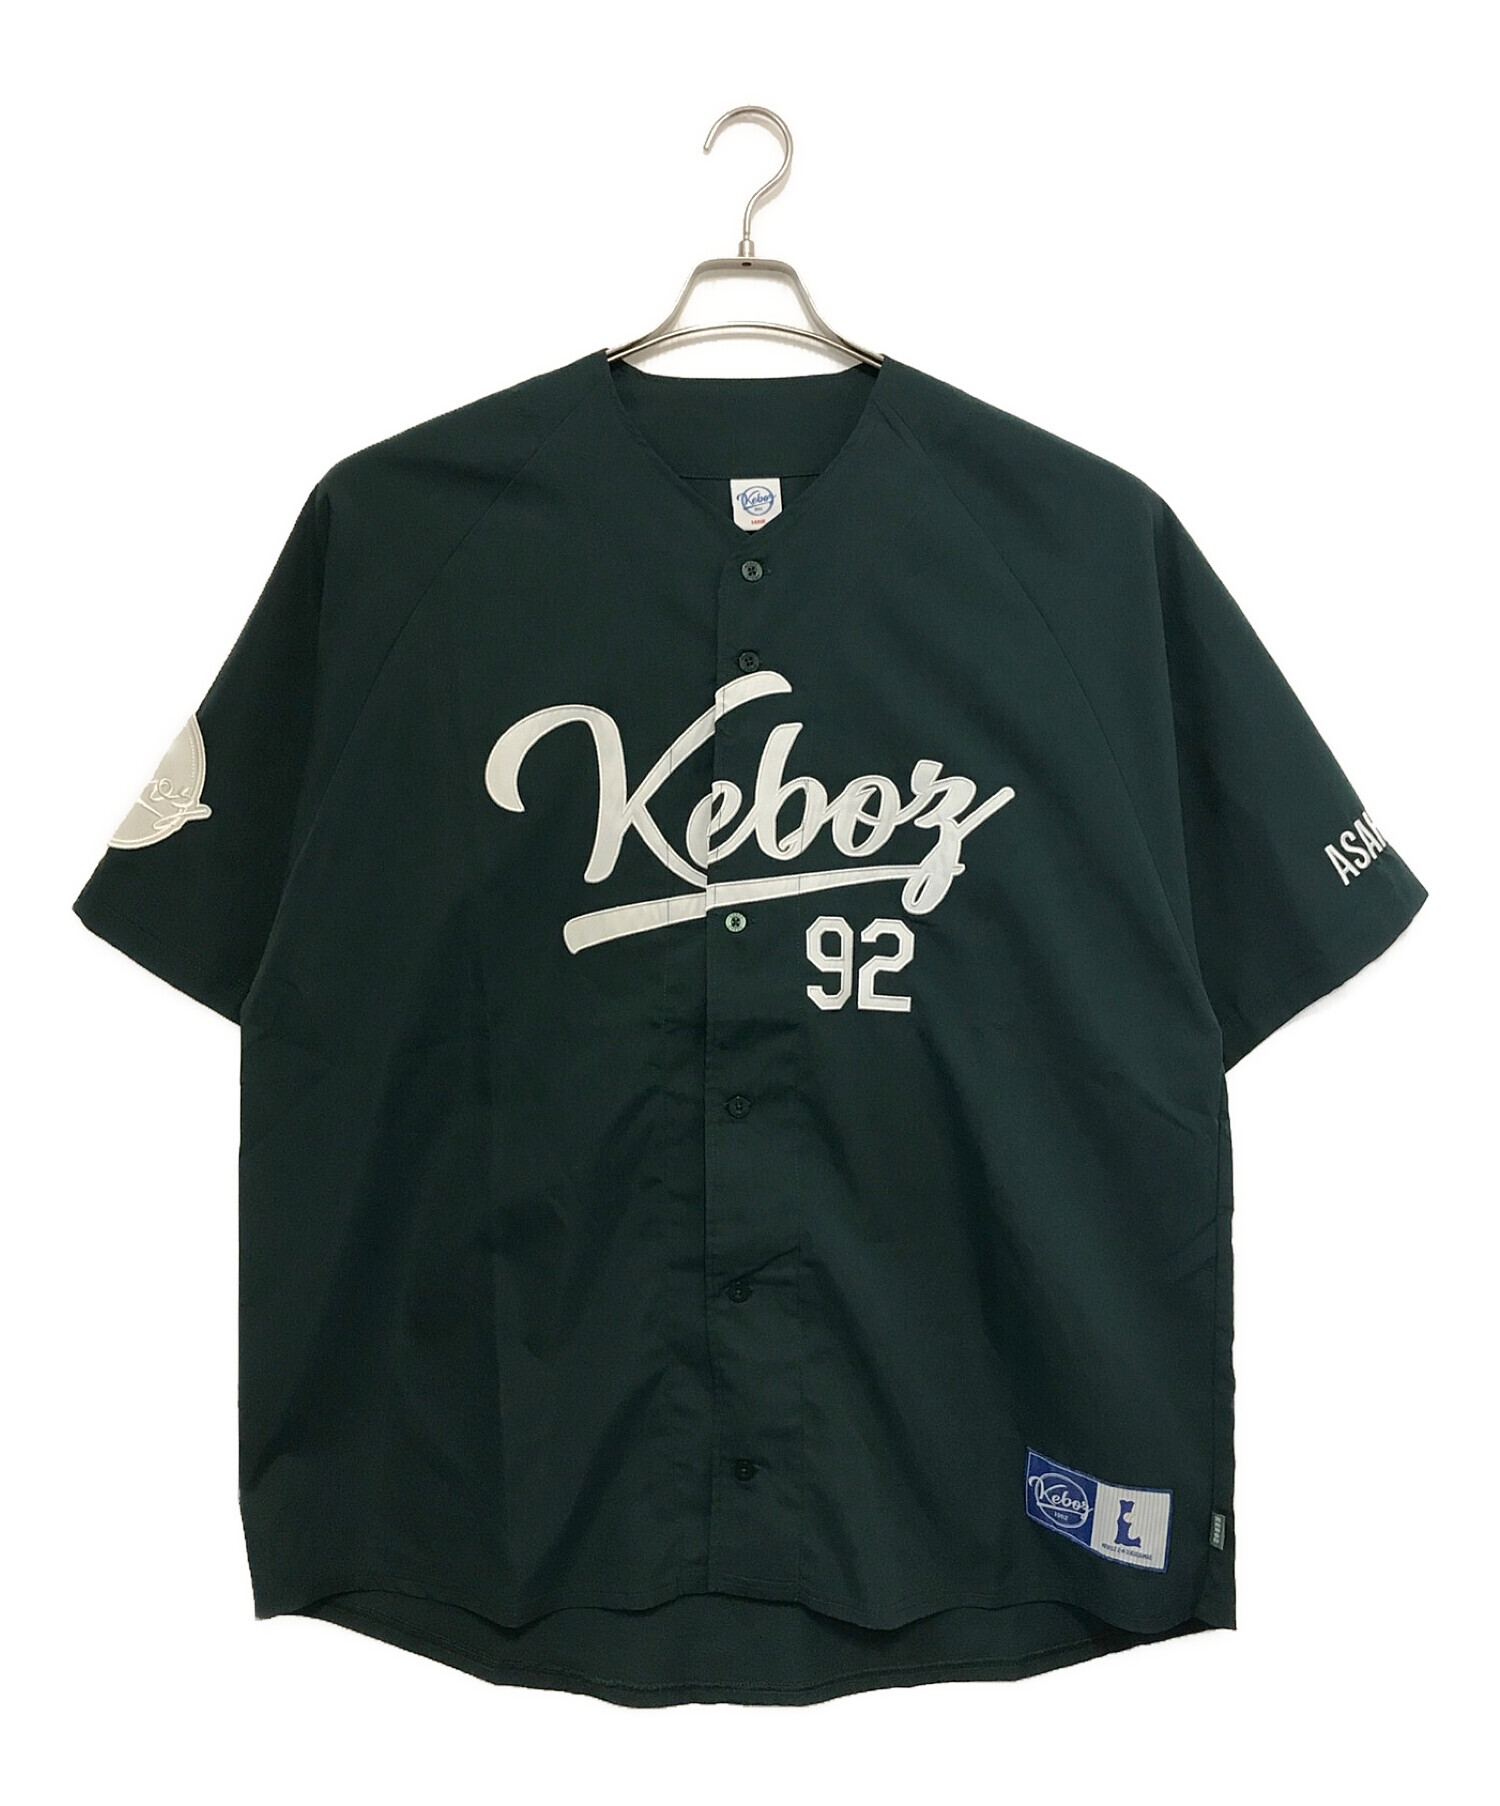 KEBOZ (ケボズ) ベースボールシャツ グリーン サイズ:Ⅼ